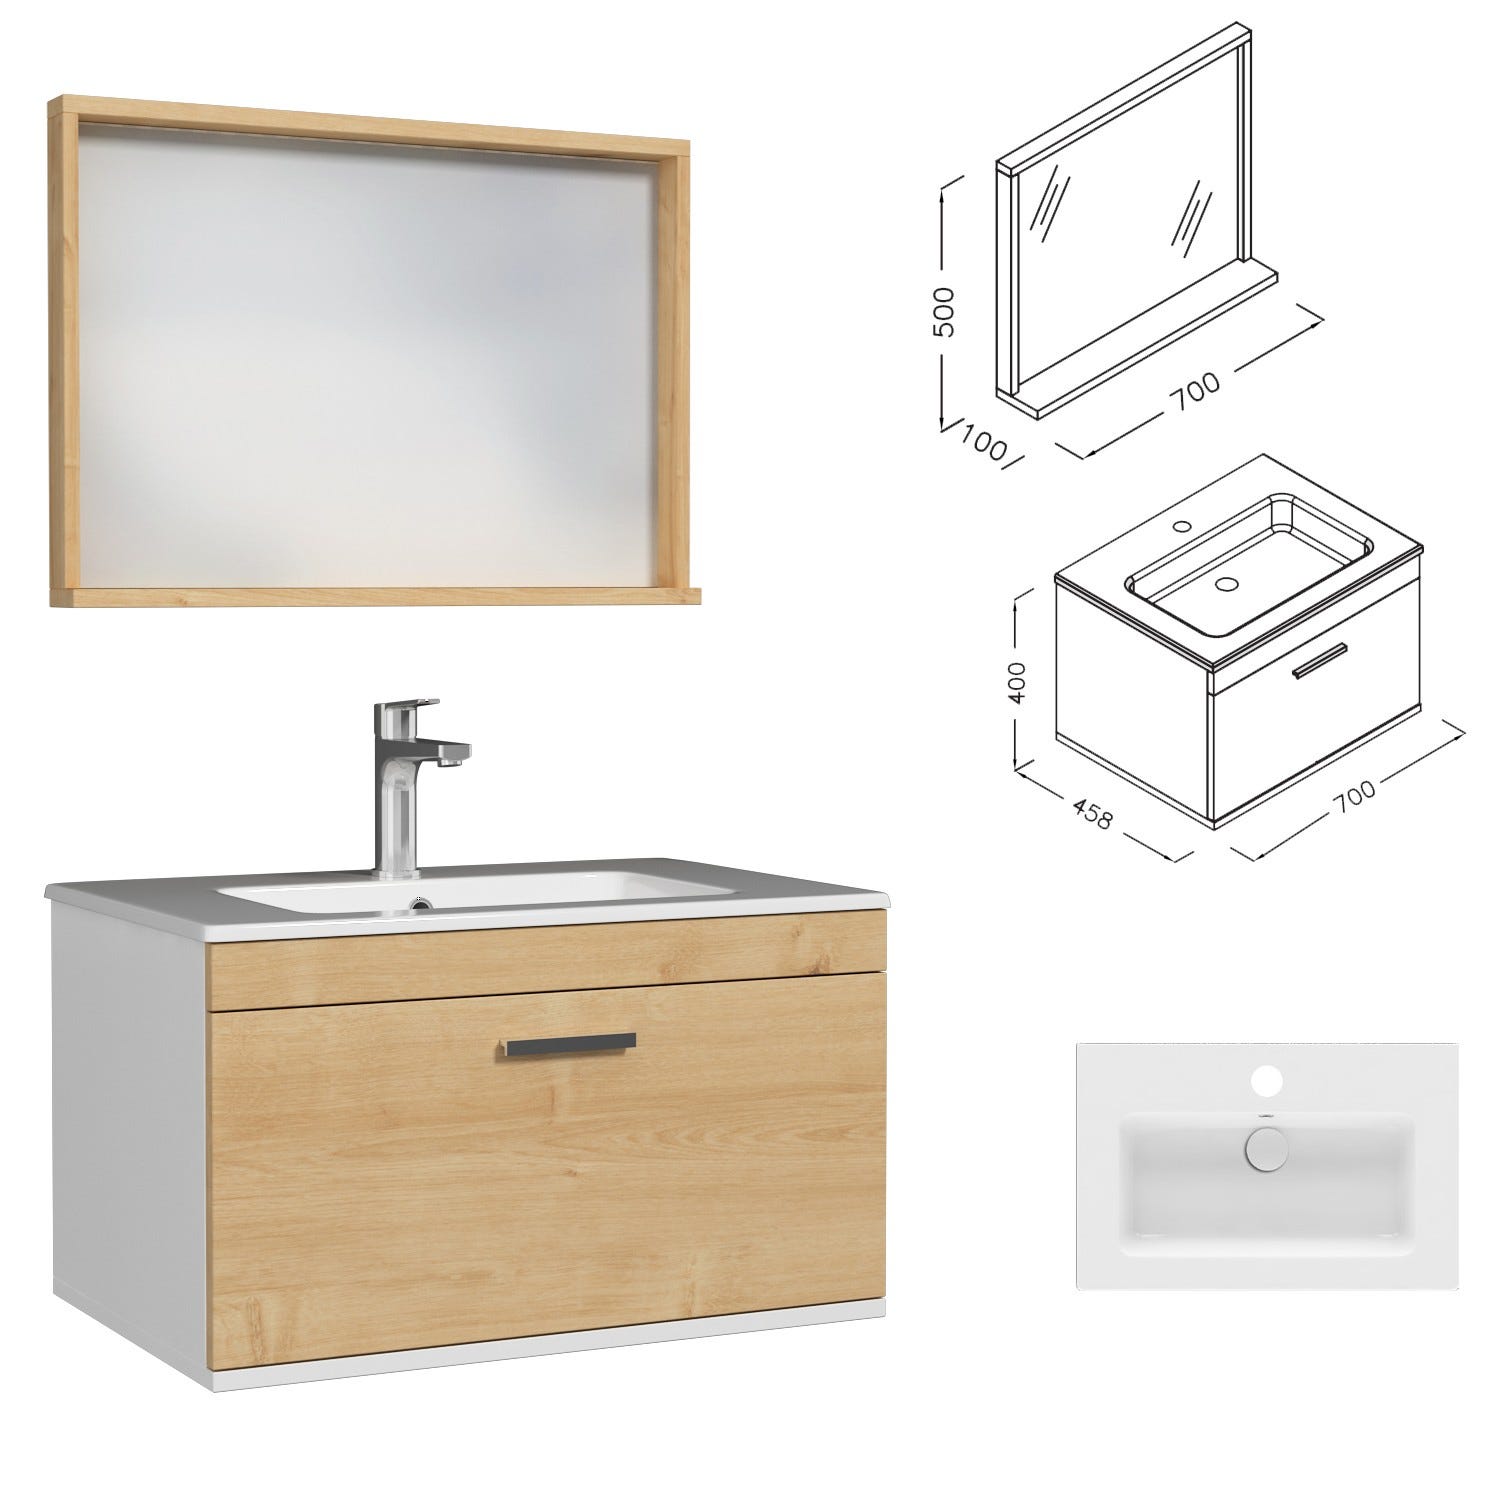 RUBITE Meuble salle de bain simple vasque 1 tiroir chêne clair largeur 70 cm + miroir cadre 3